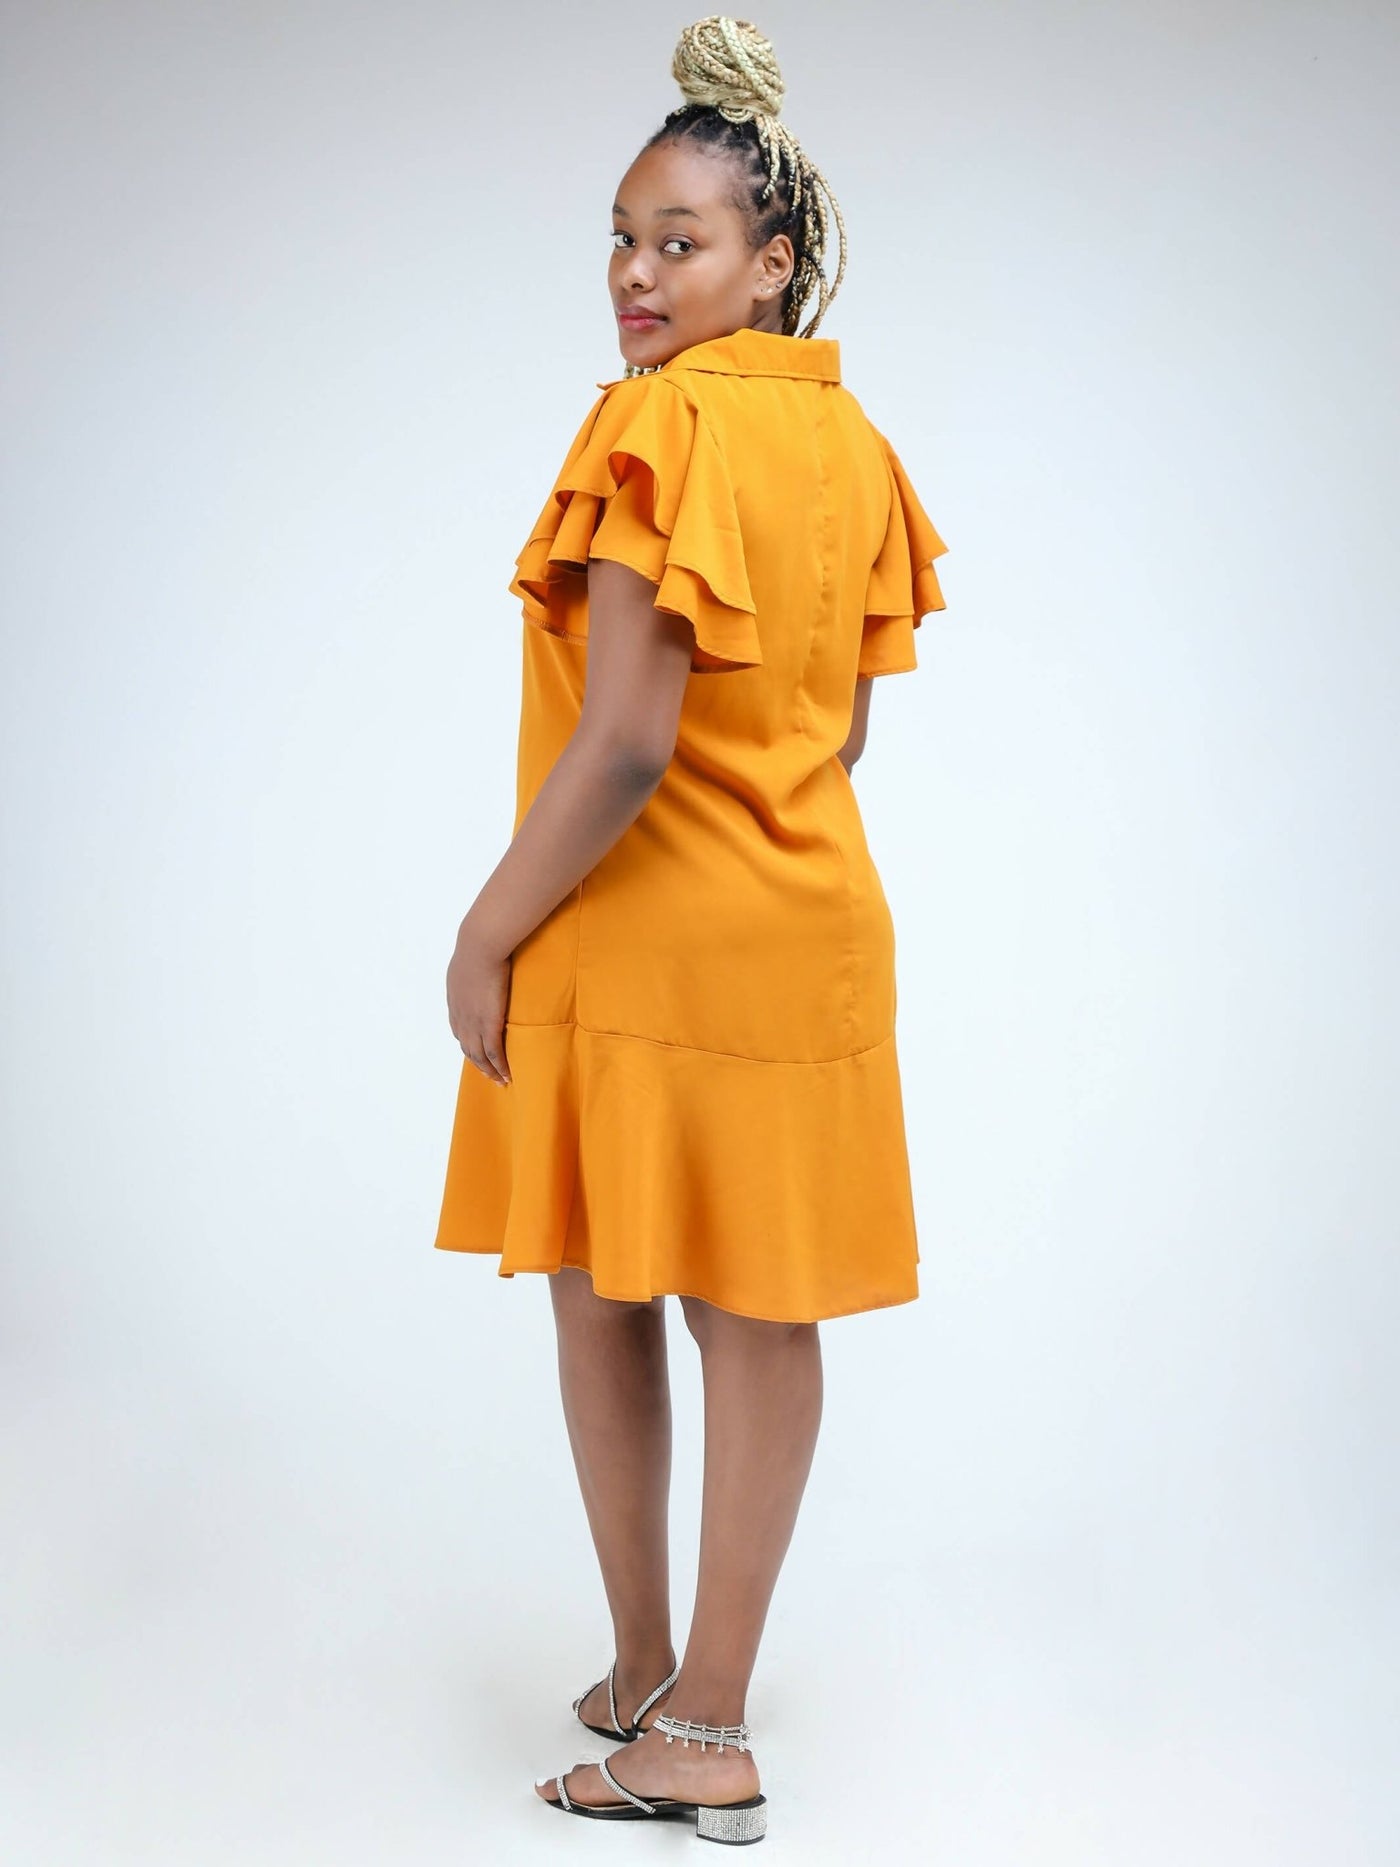 Phyls Collections Naisoi Knee Length Shift Dress - Yellow - Shopzetu